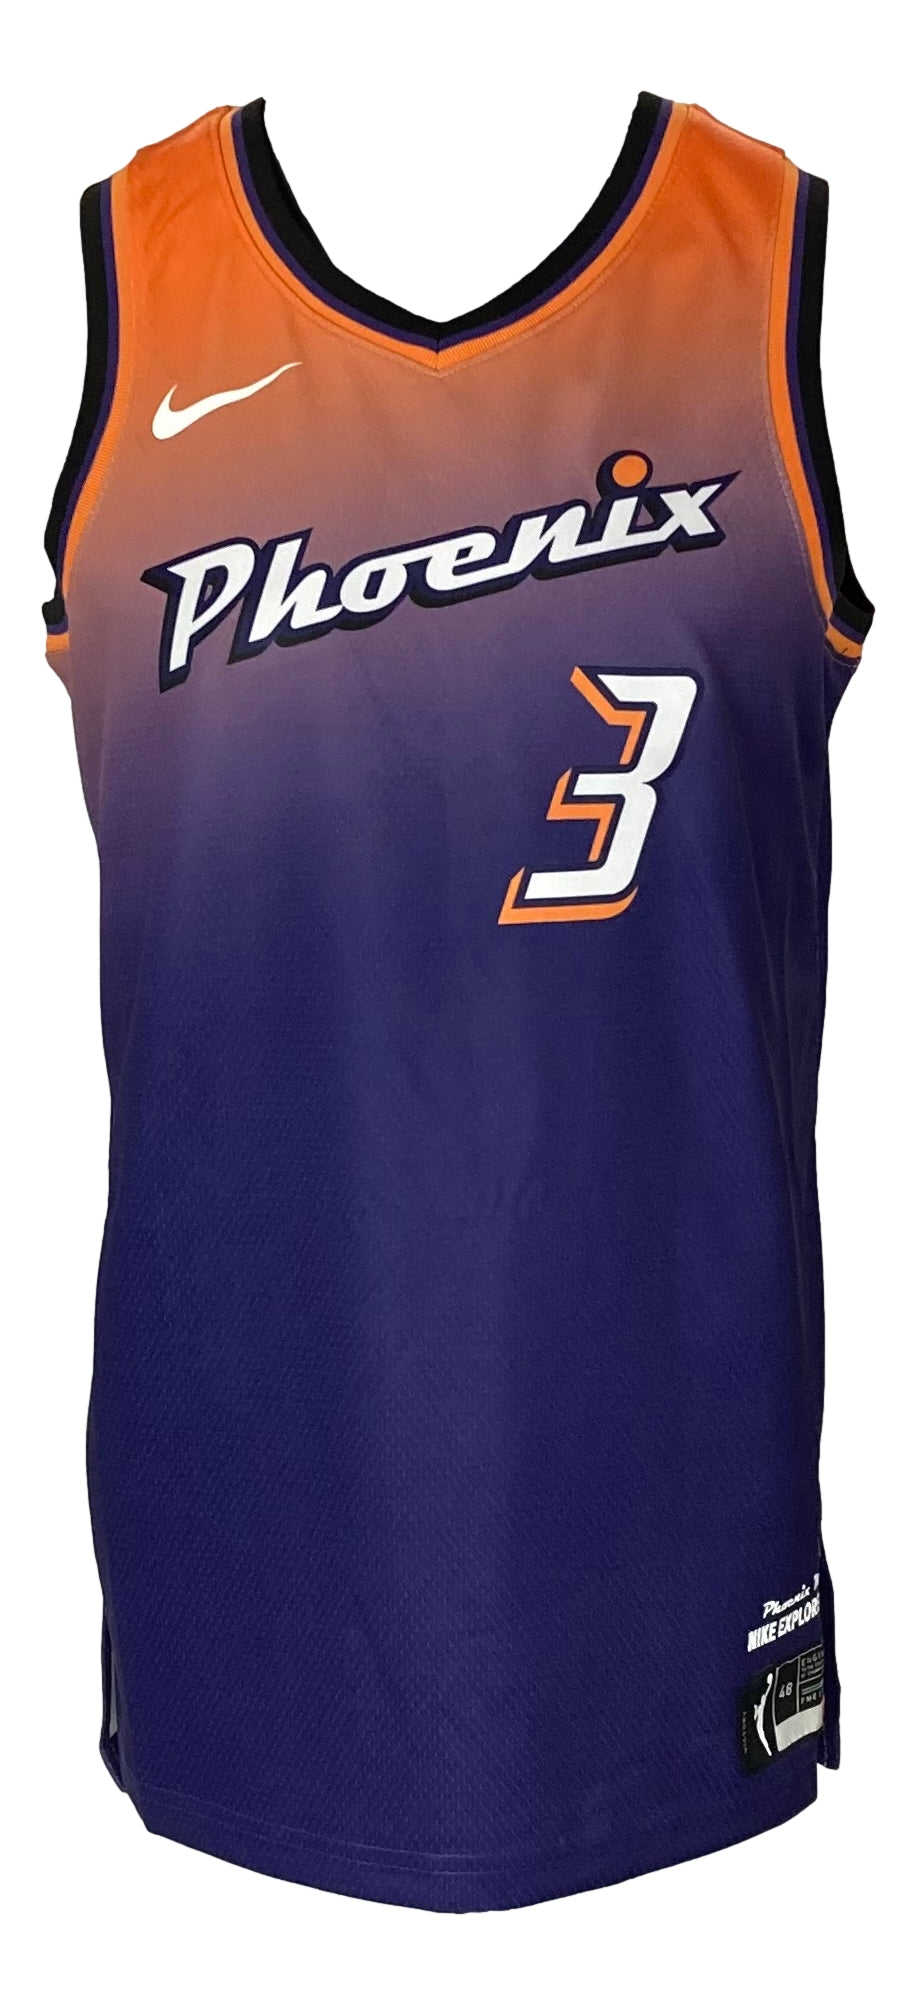 Authentic Nike NBA Phoenix Suns City Edition India